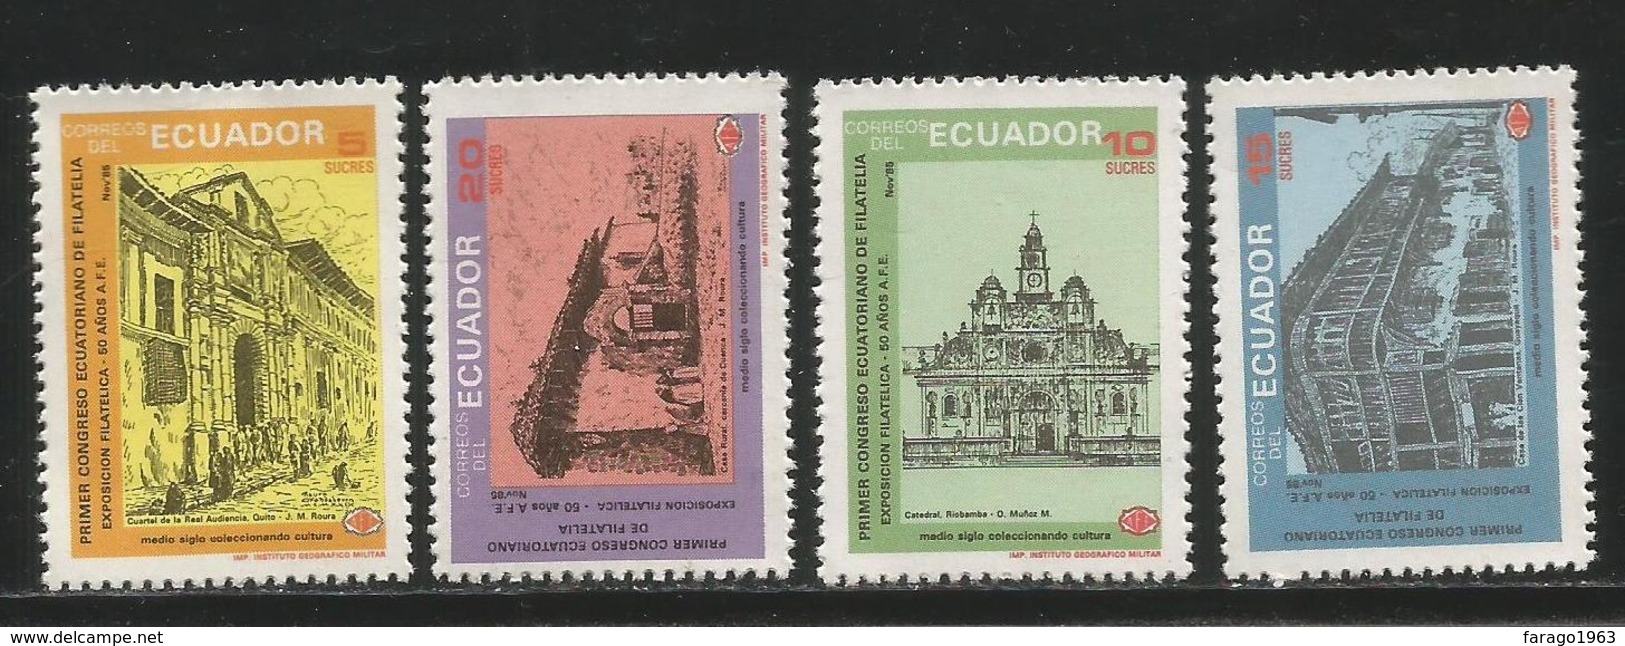 1985 Ecuador Philatelic Congress Architecture Complete Set Of 4 MNH - Ecuador